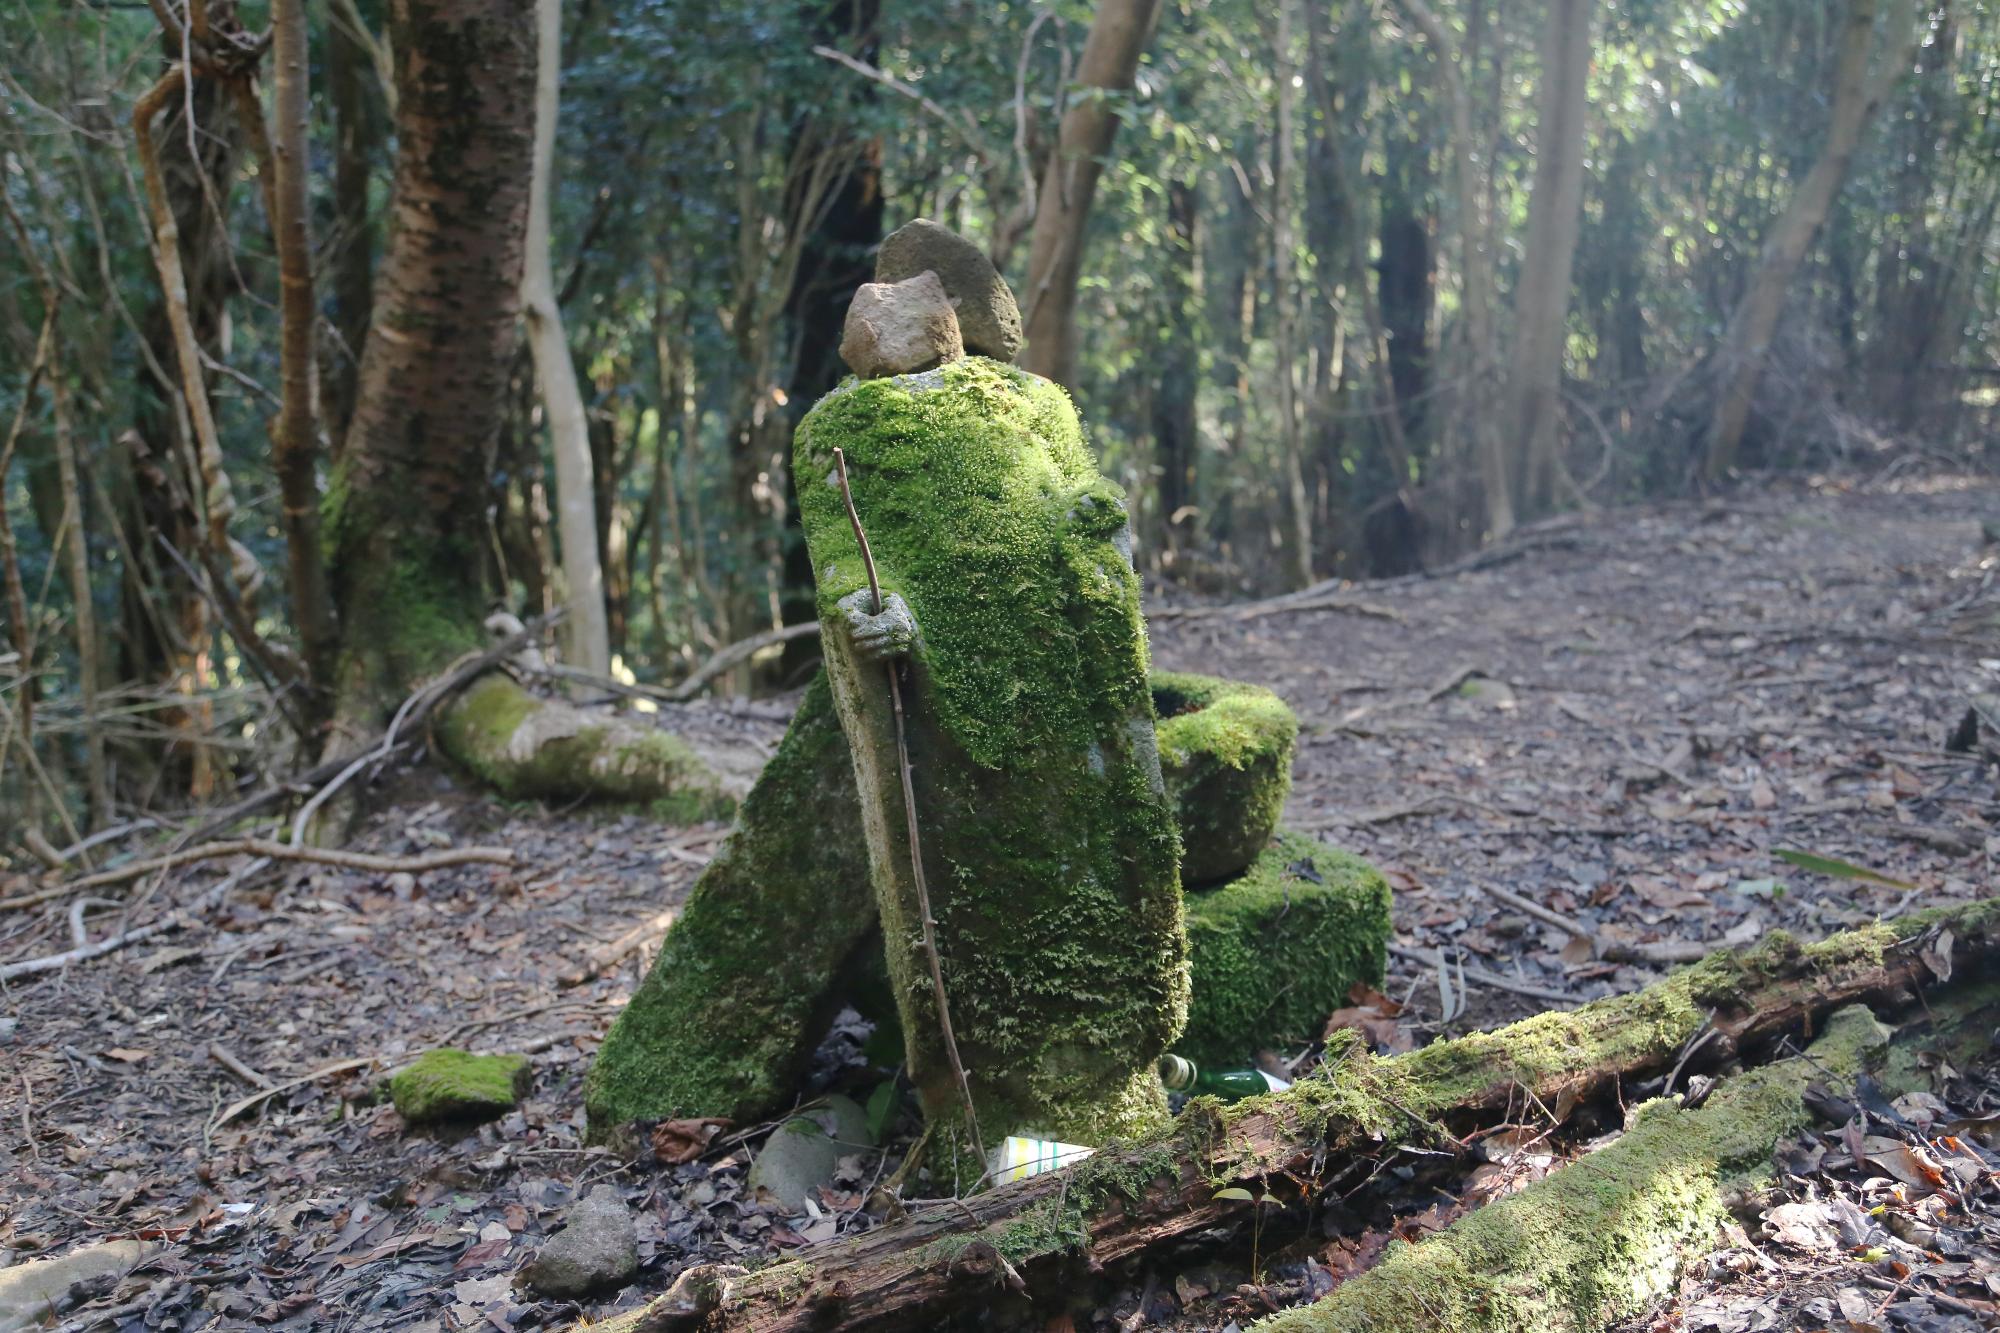 The Headless Jizo statue